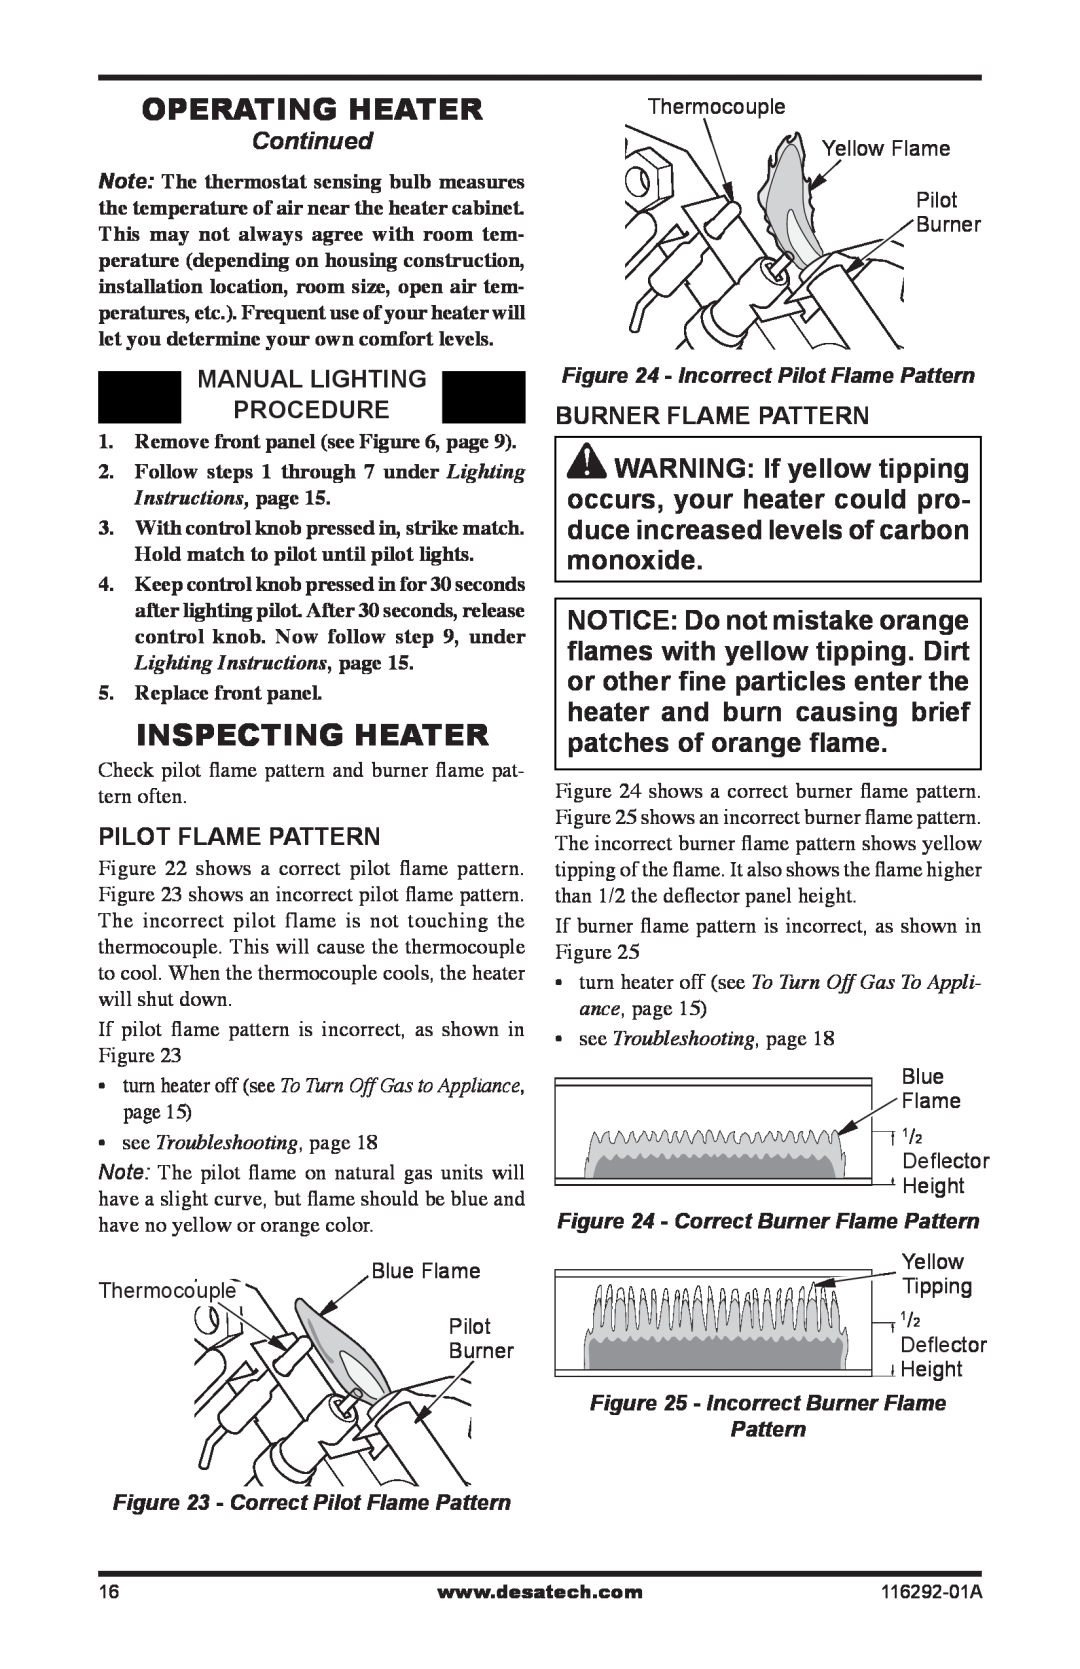 Desa VSL18PT Operating Heater, Inspecting Heater, Manual Lighting Procedure, Burner Flame Pattern, Pilot Flame Pattern 